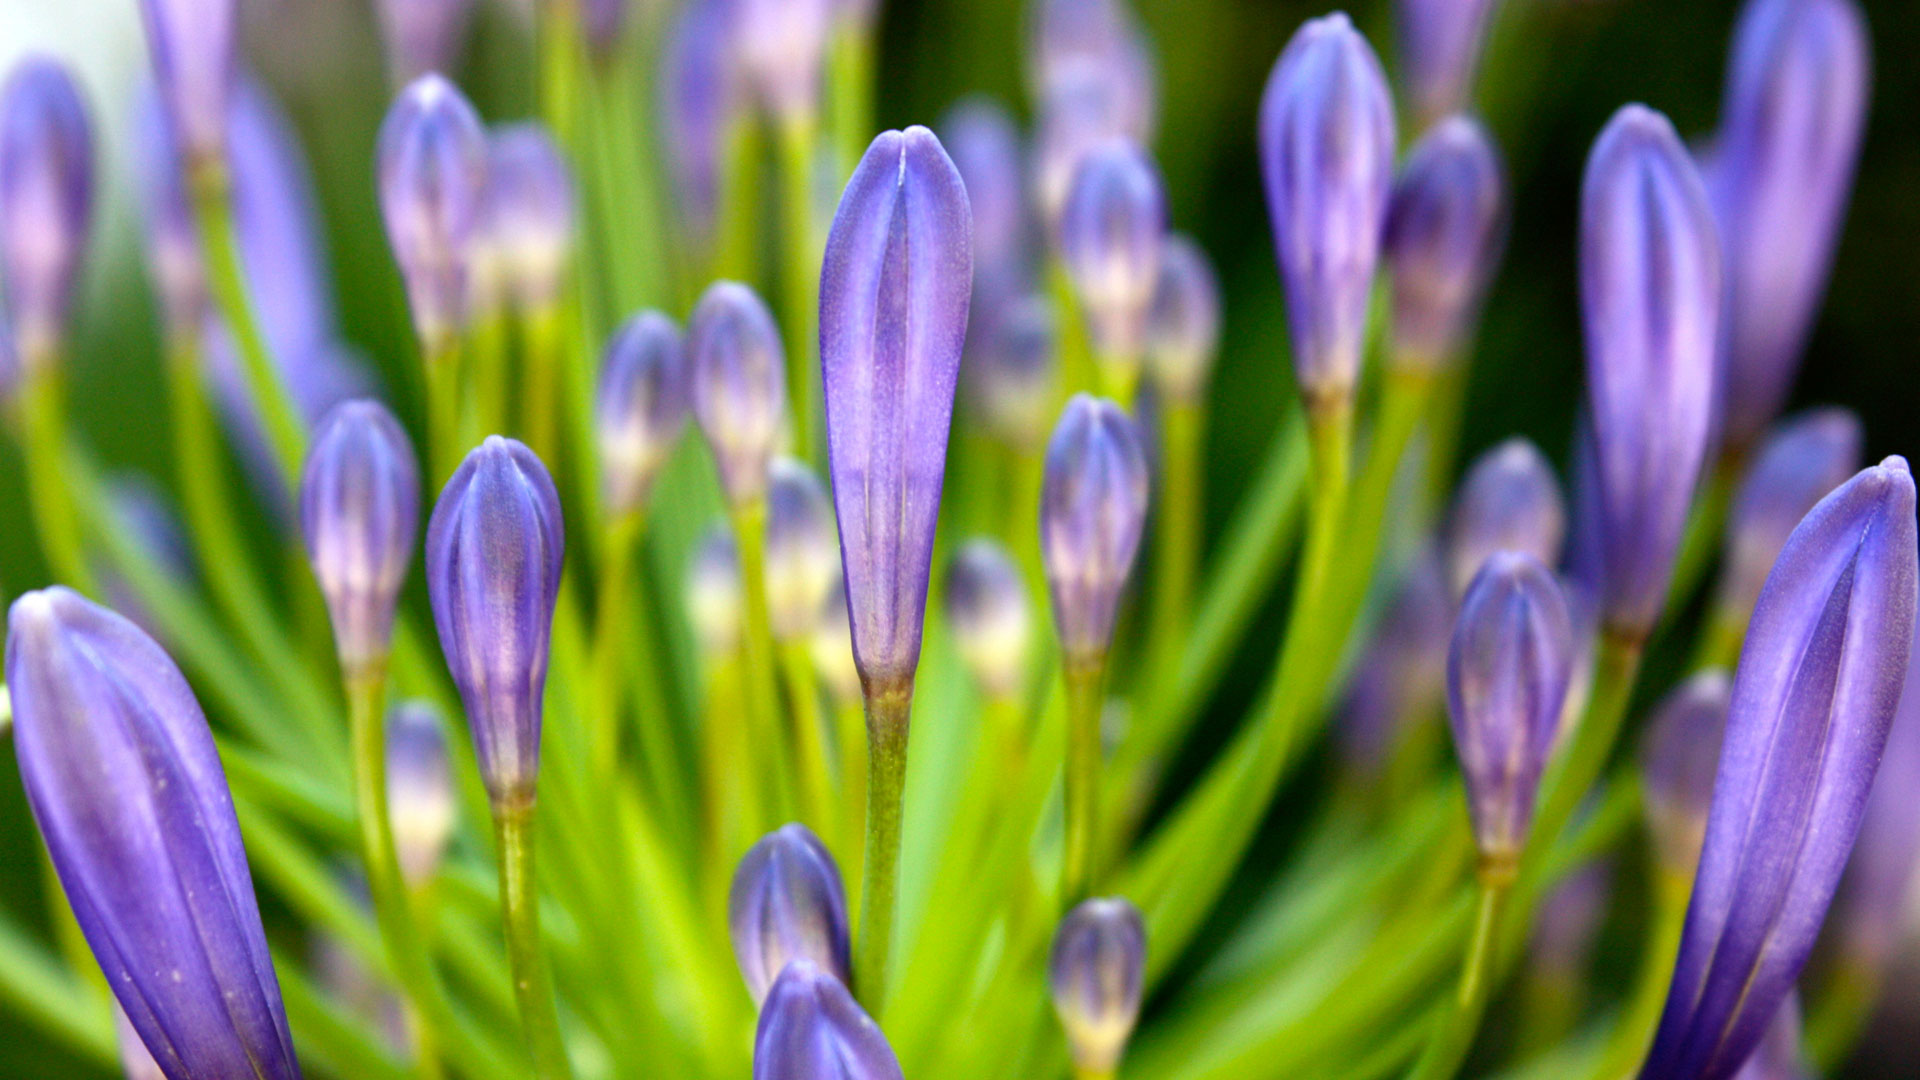 sfondi fiore hd 1080p,fiore,pianta fiorita,pianta,blu,viola